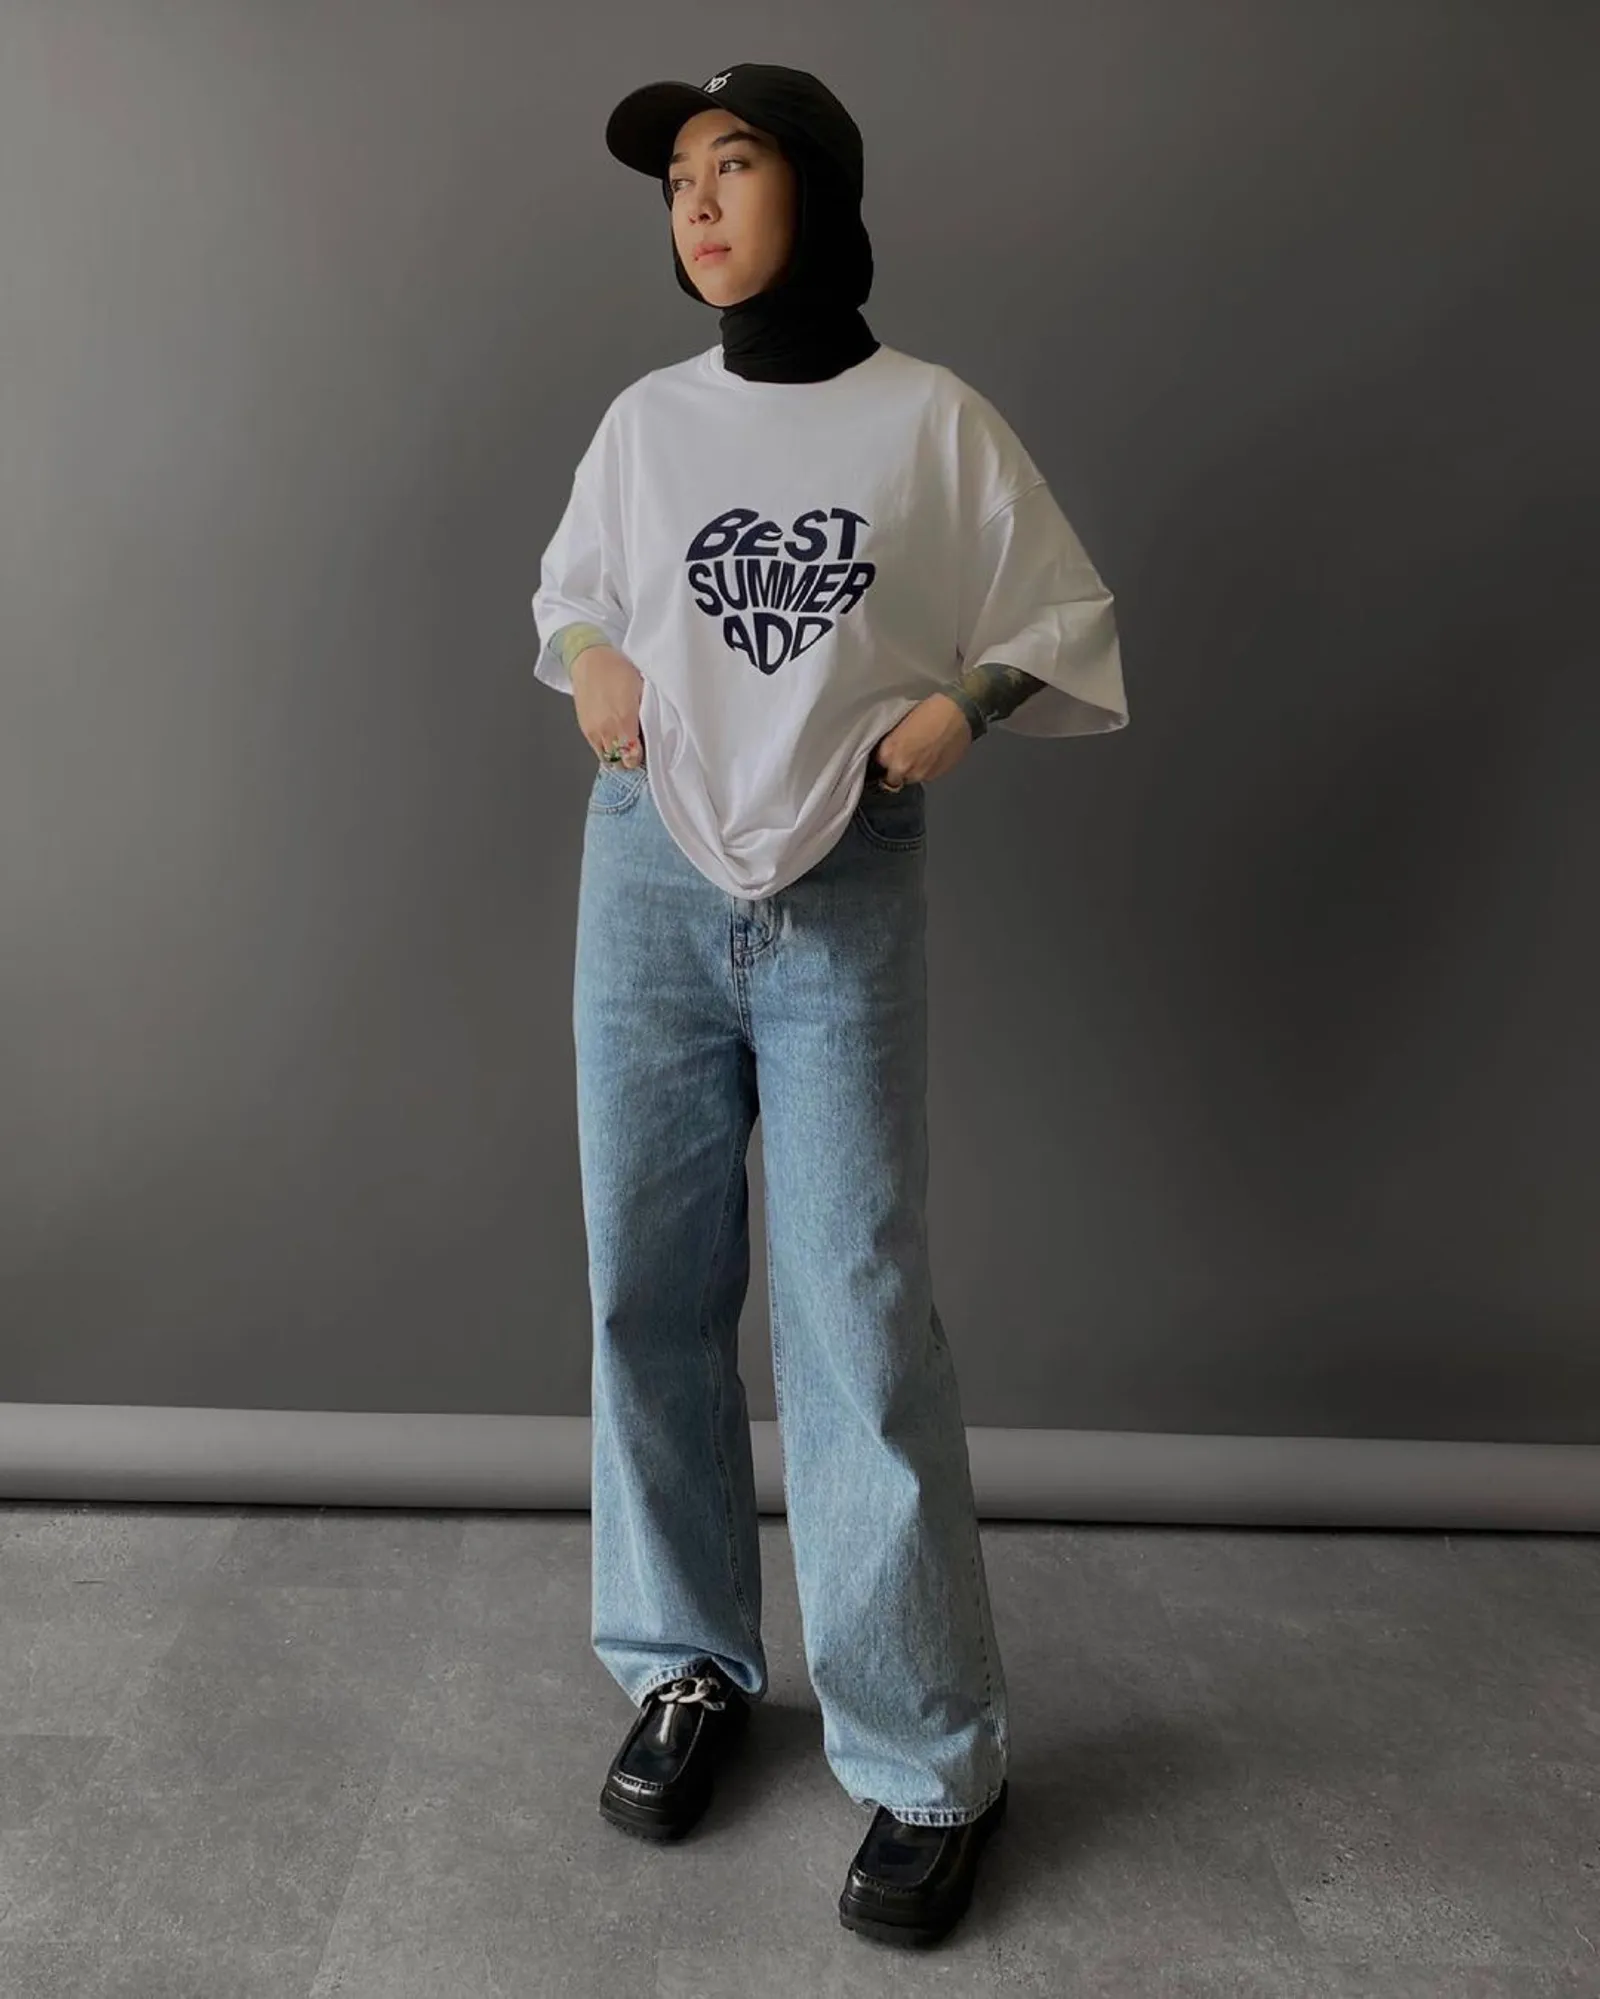 7 Ide Aksesori Hijab a La Selebgram Indonesia